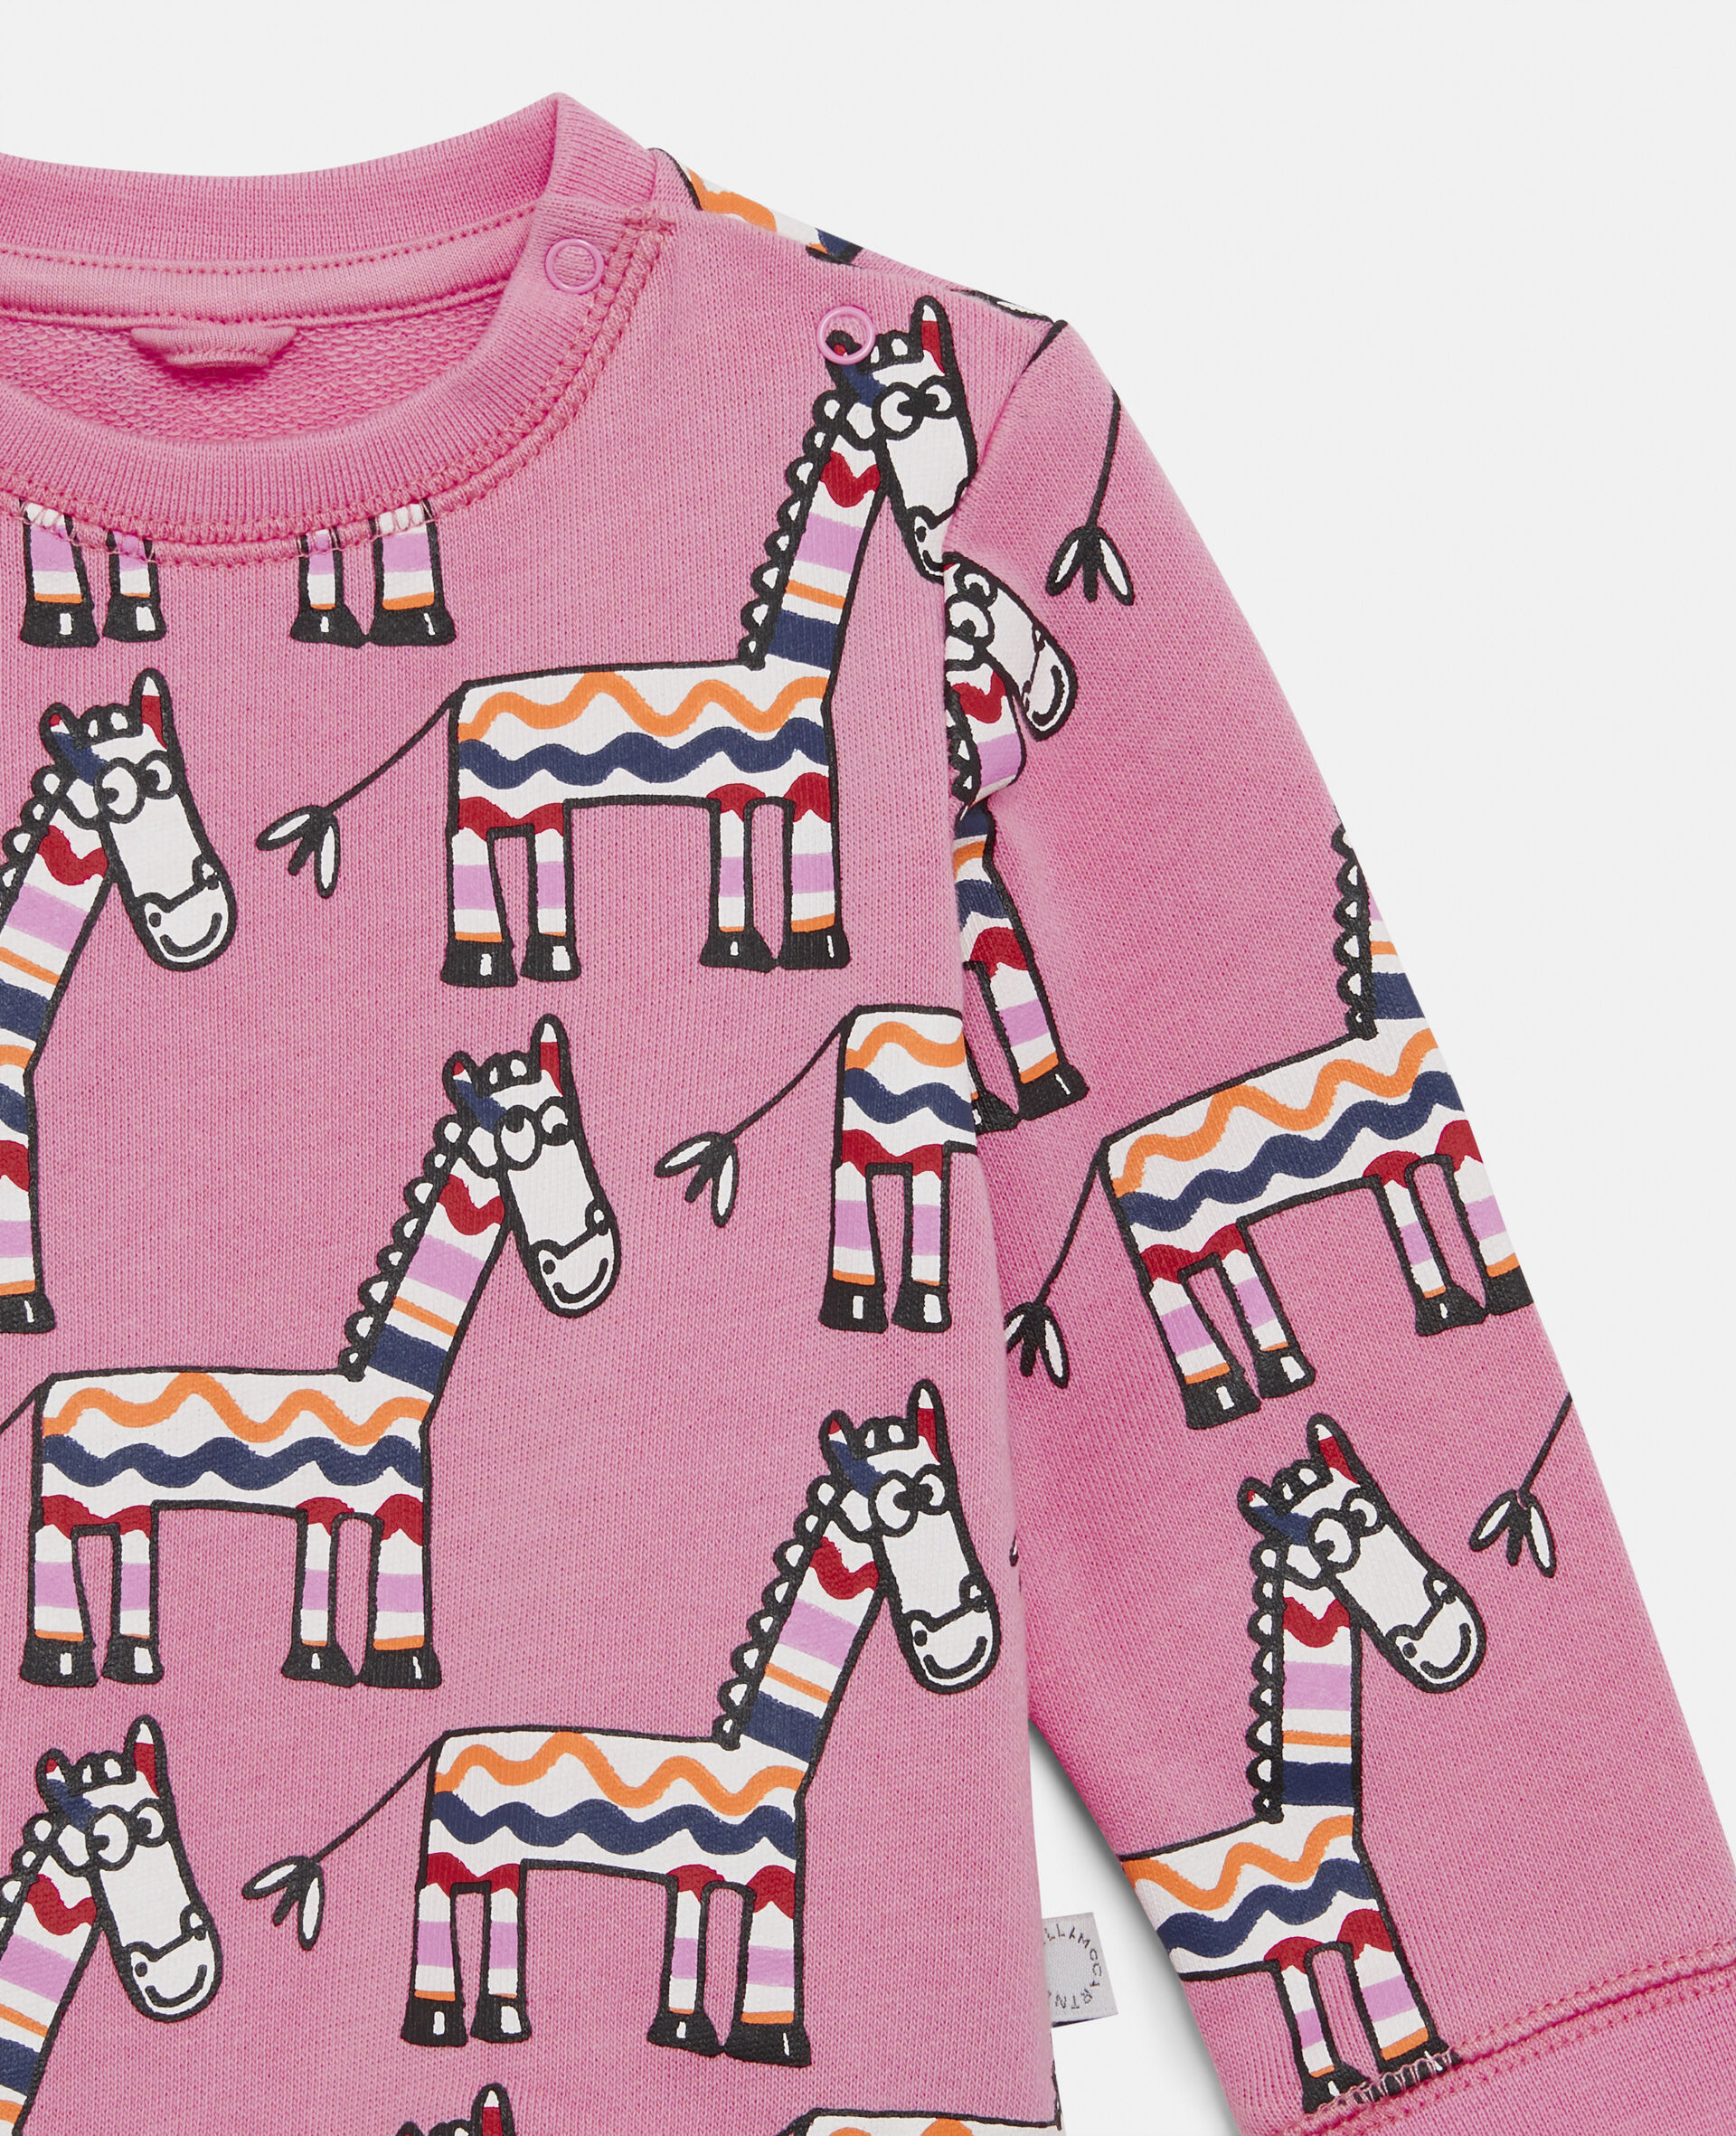  Zebra Print Fleece Sweatshirt-Pink-large image number 1